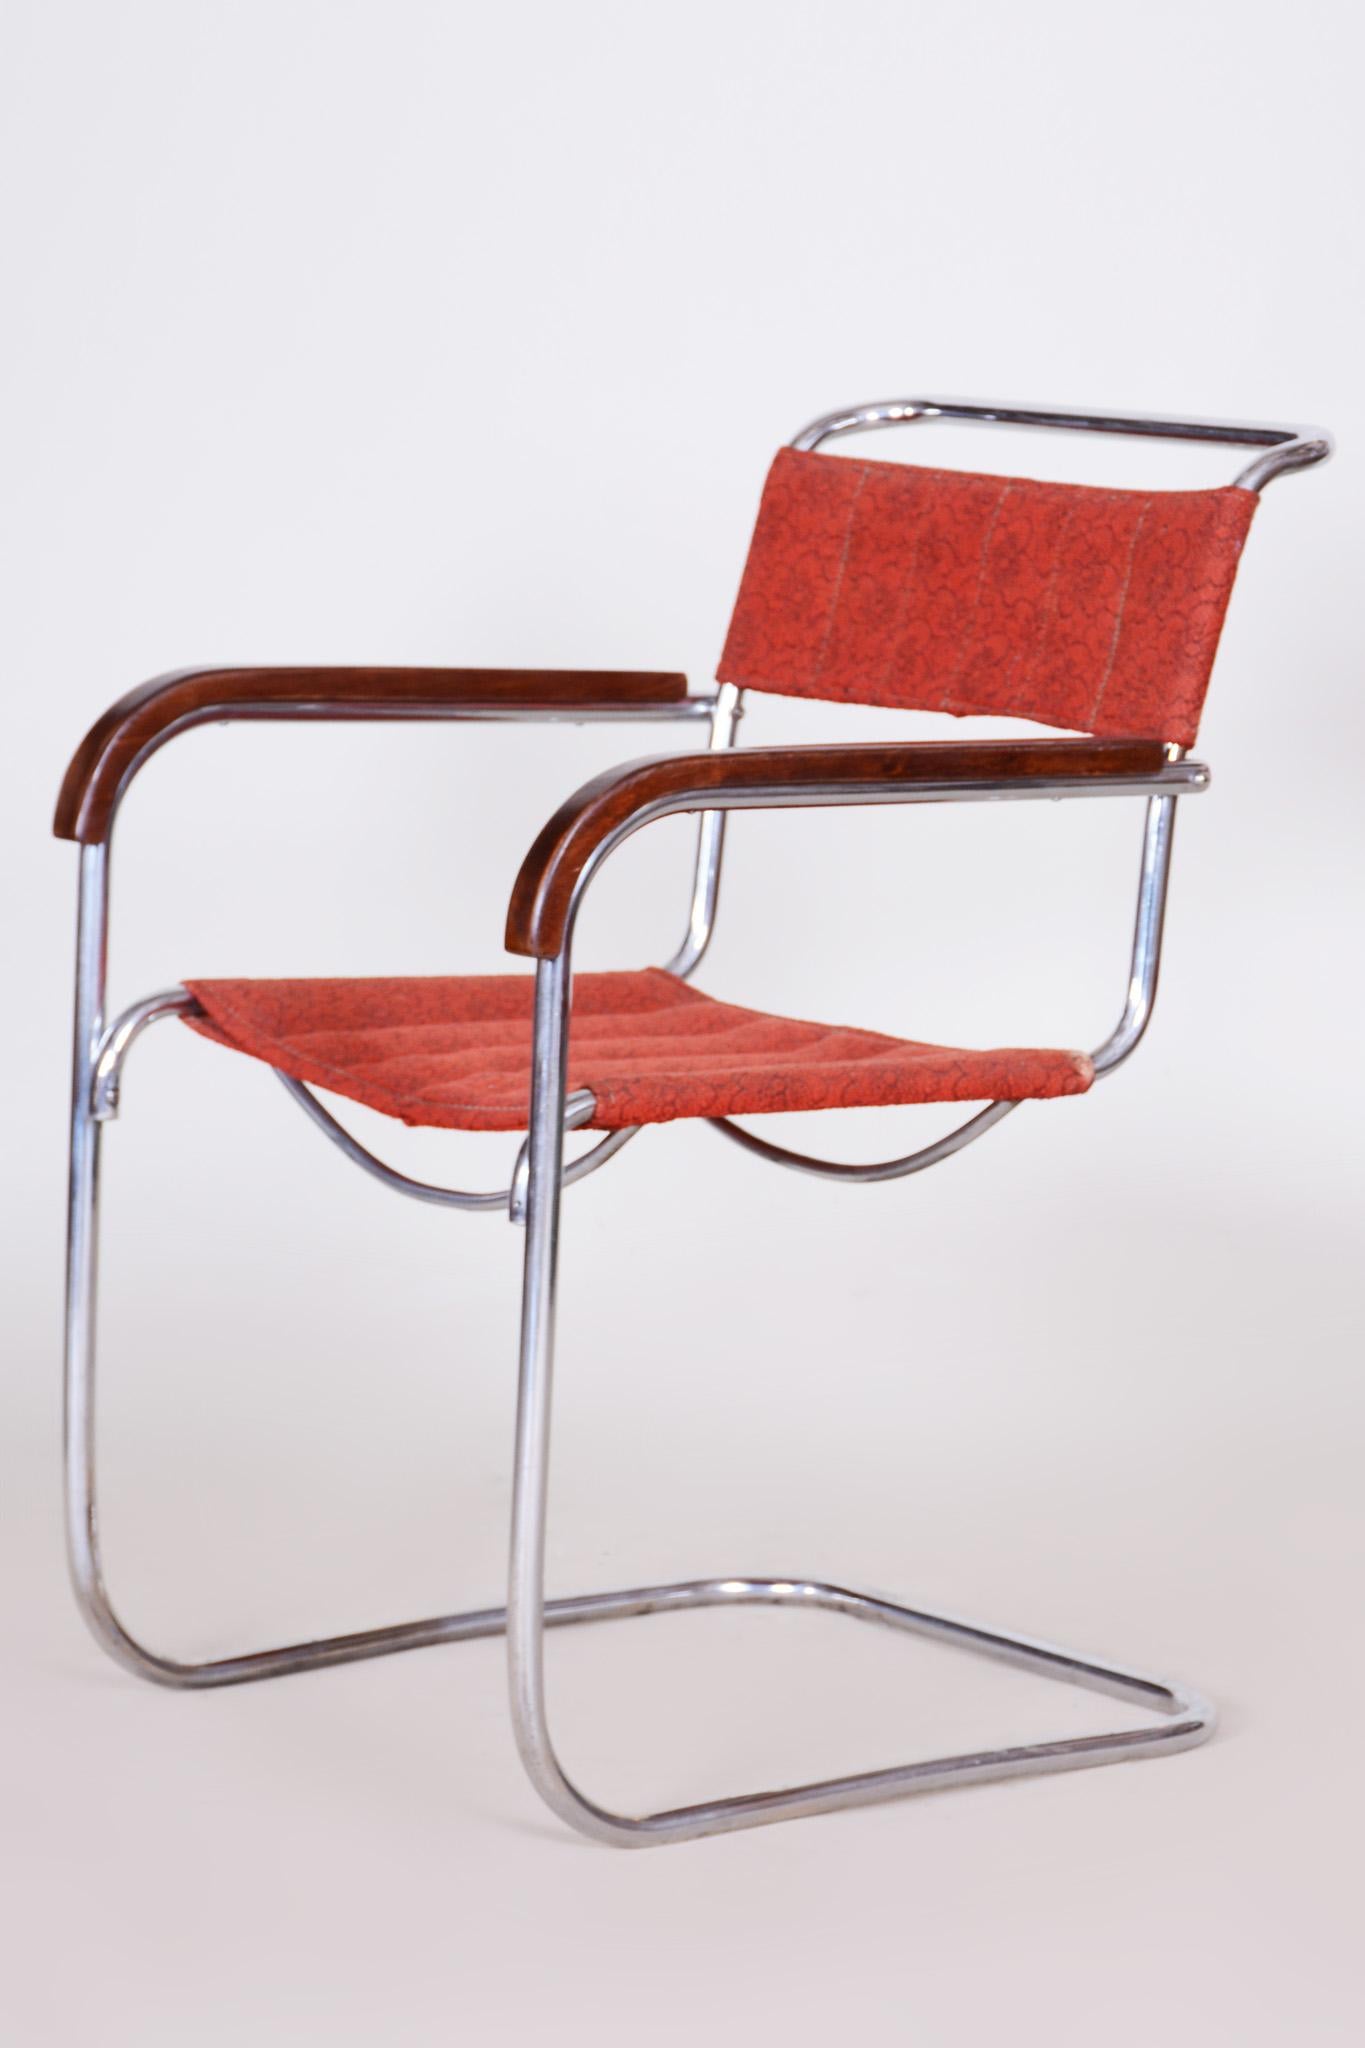 Red Bauhaus Armchair by Marcel Breuer, Mücke, Melder, Beech, Chrome, 1930s For Sale 1